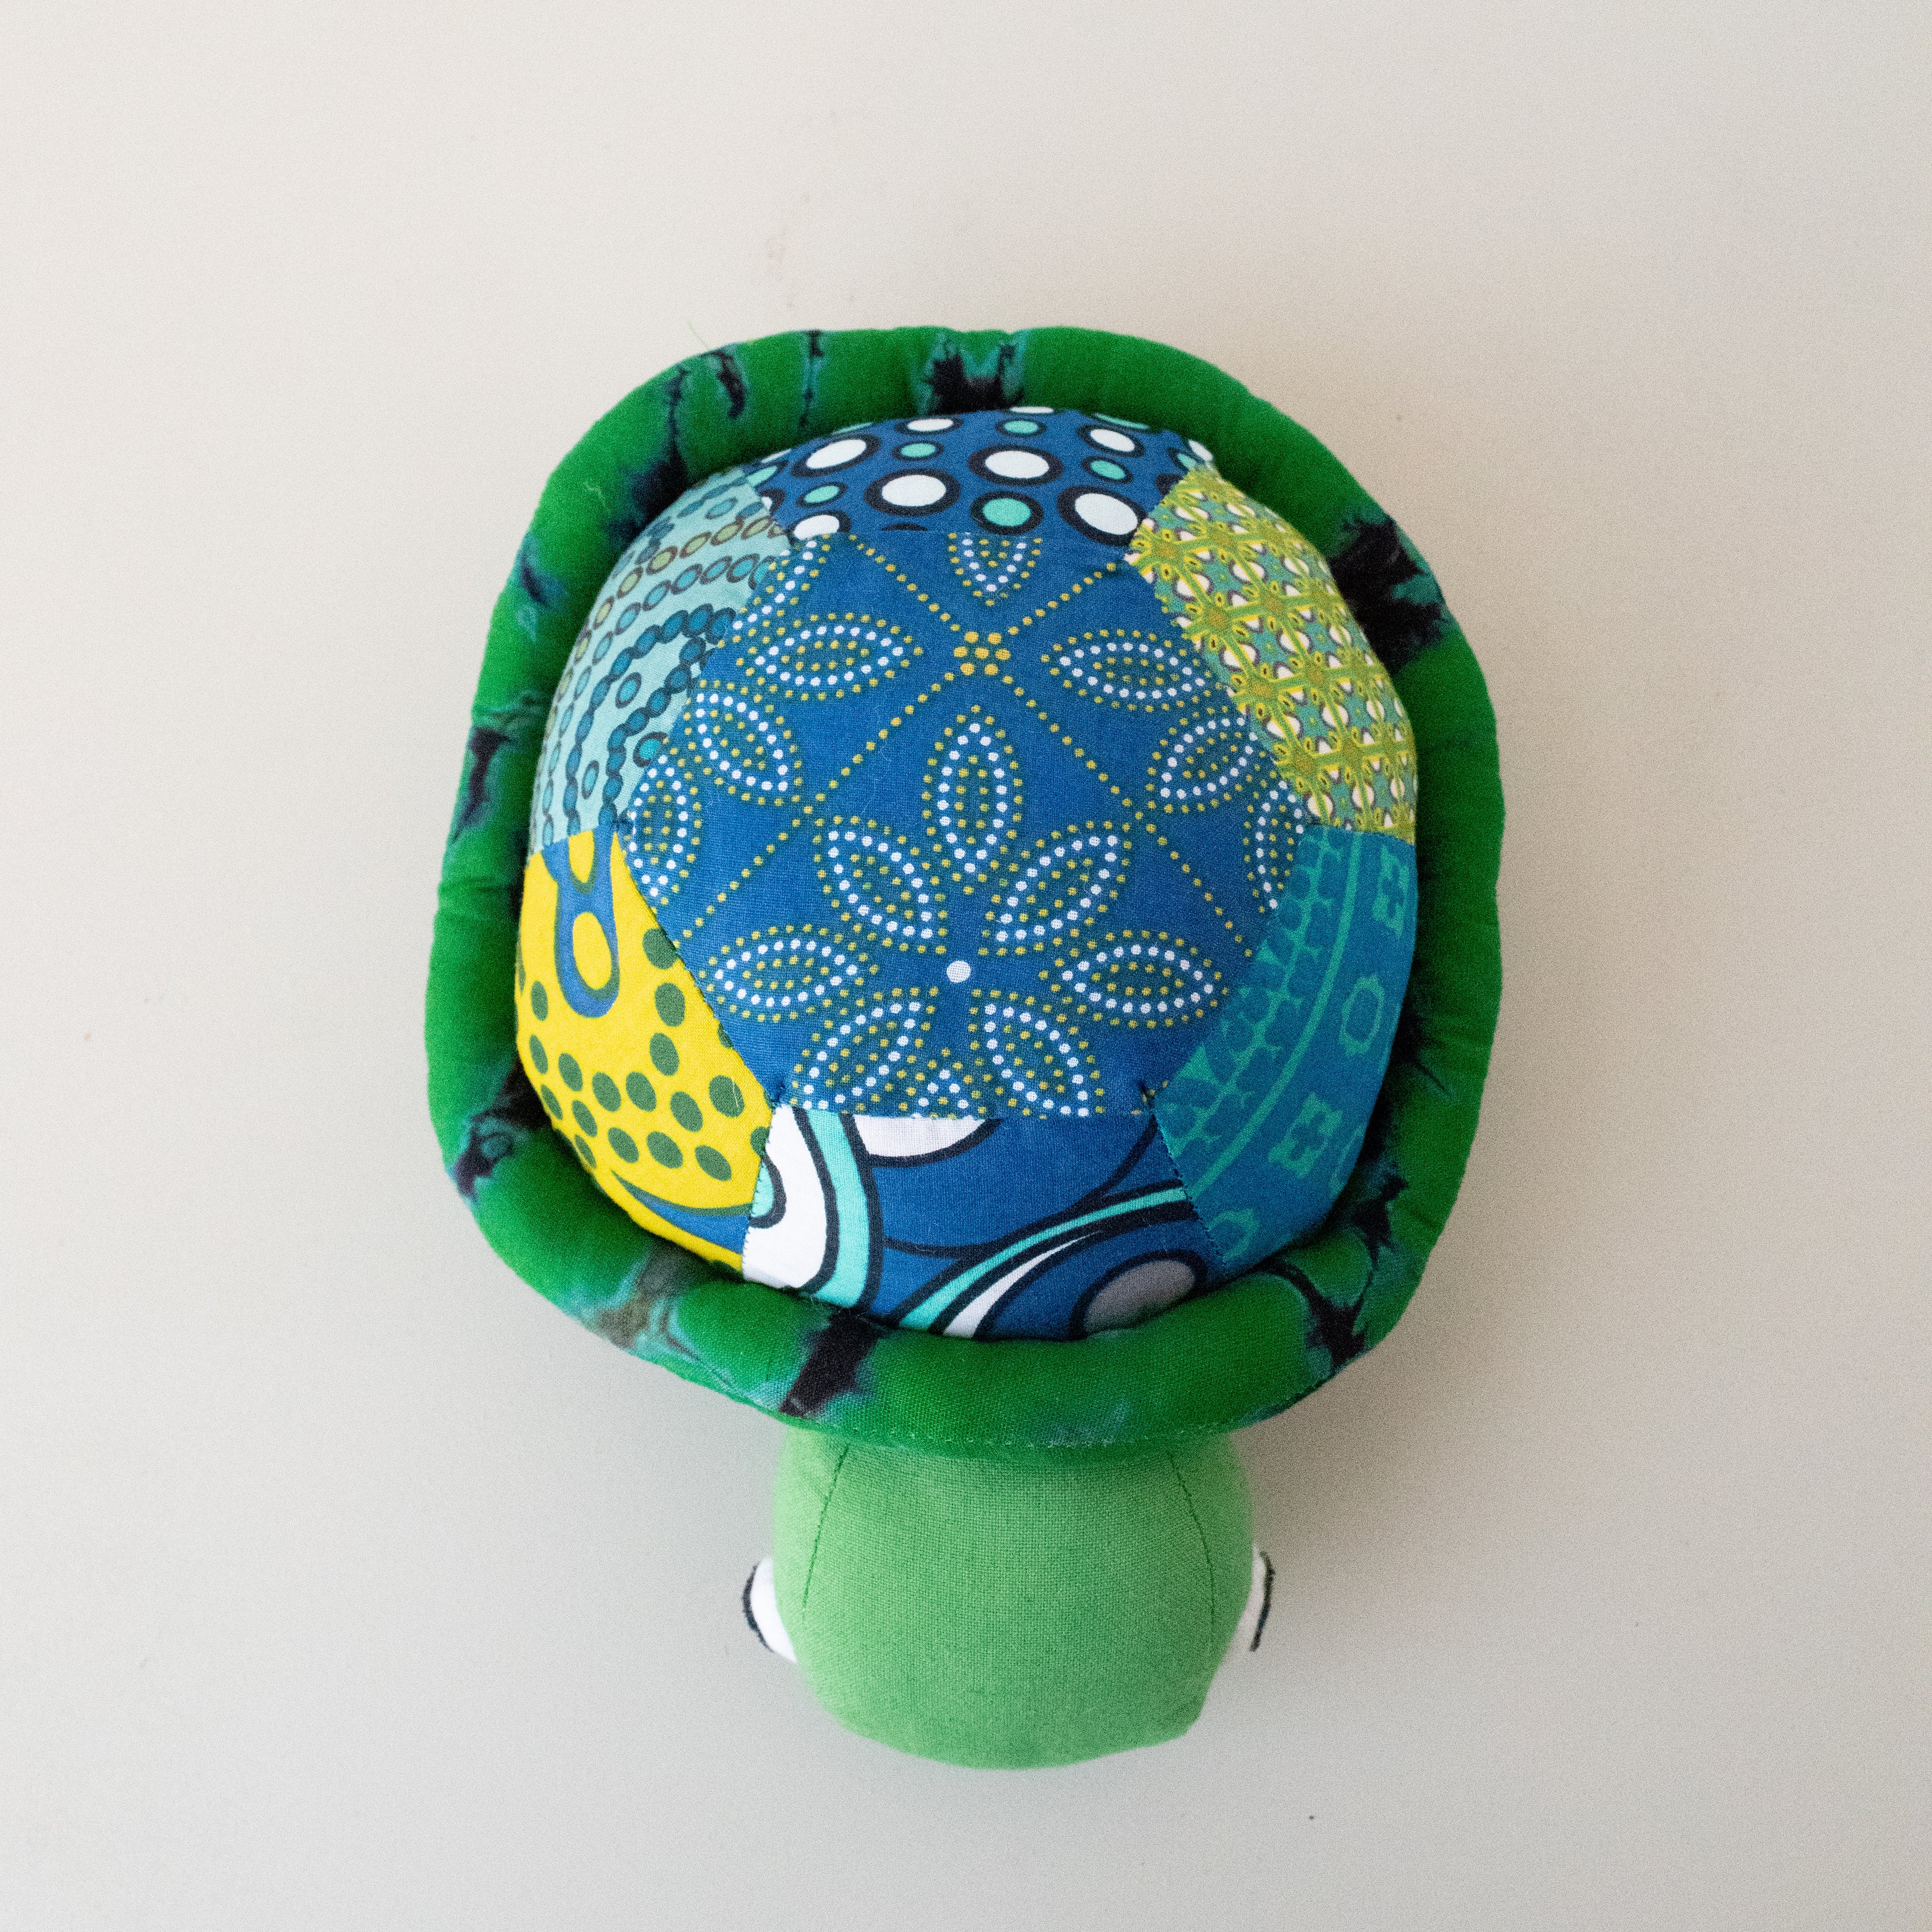 Plush Turtle - handmade using local Kenyan fabrics by the women of Amani Kenya for a Fair Trade boutique